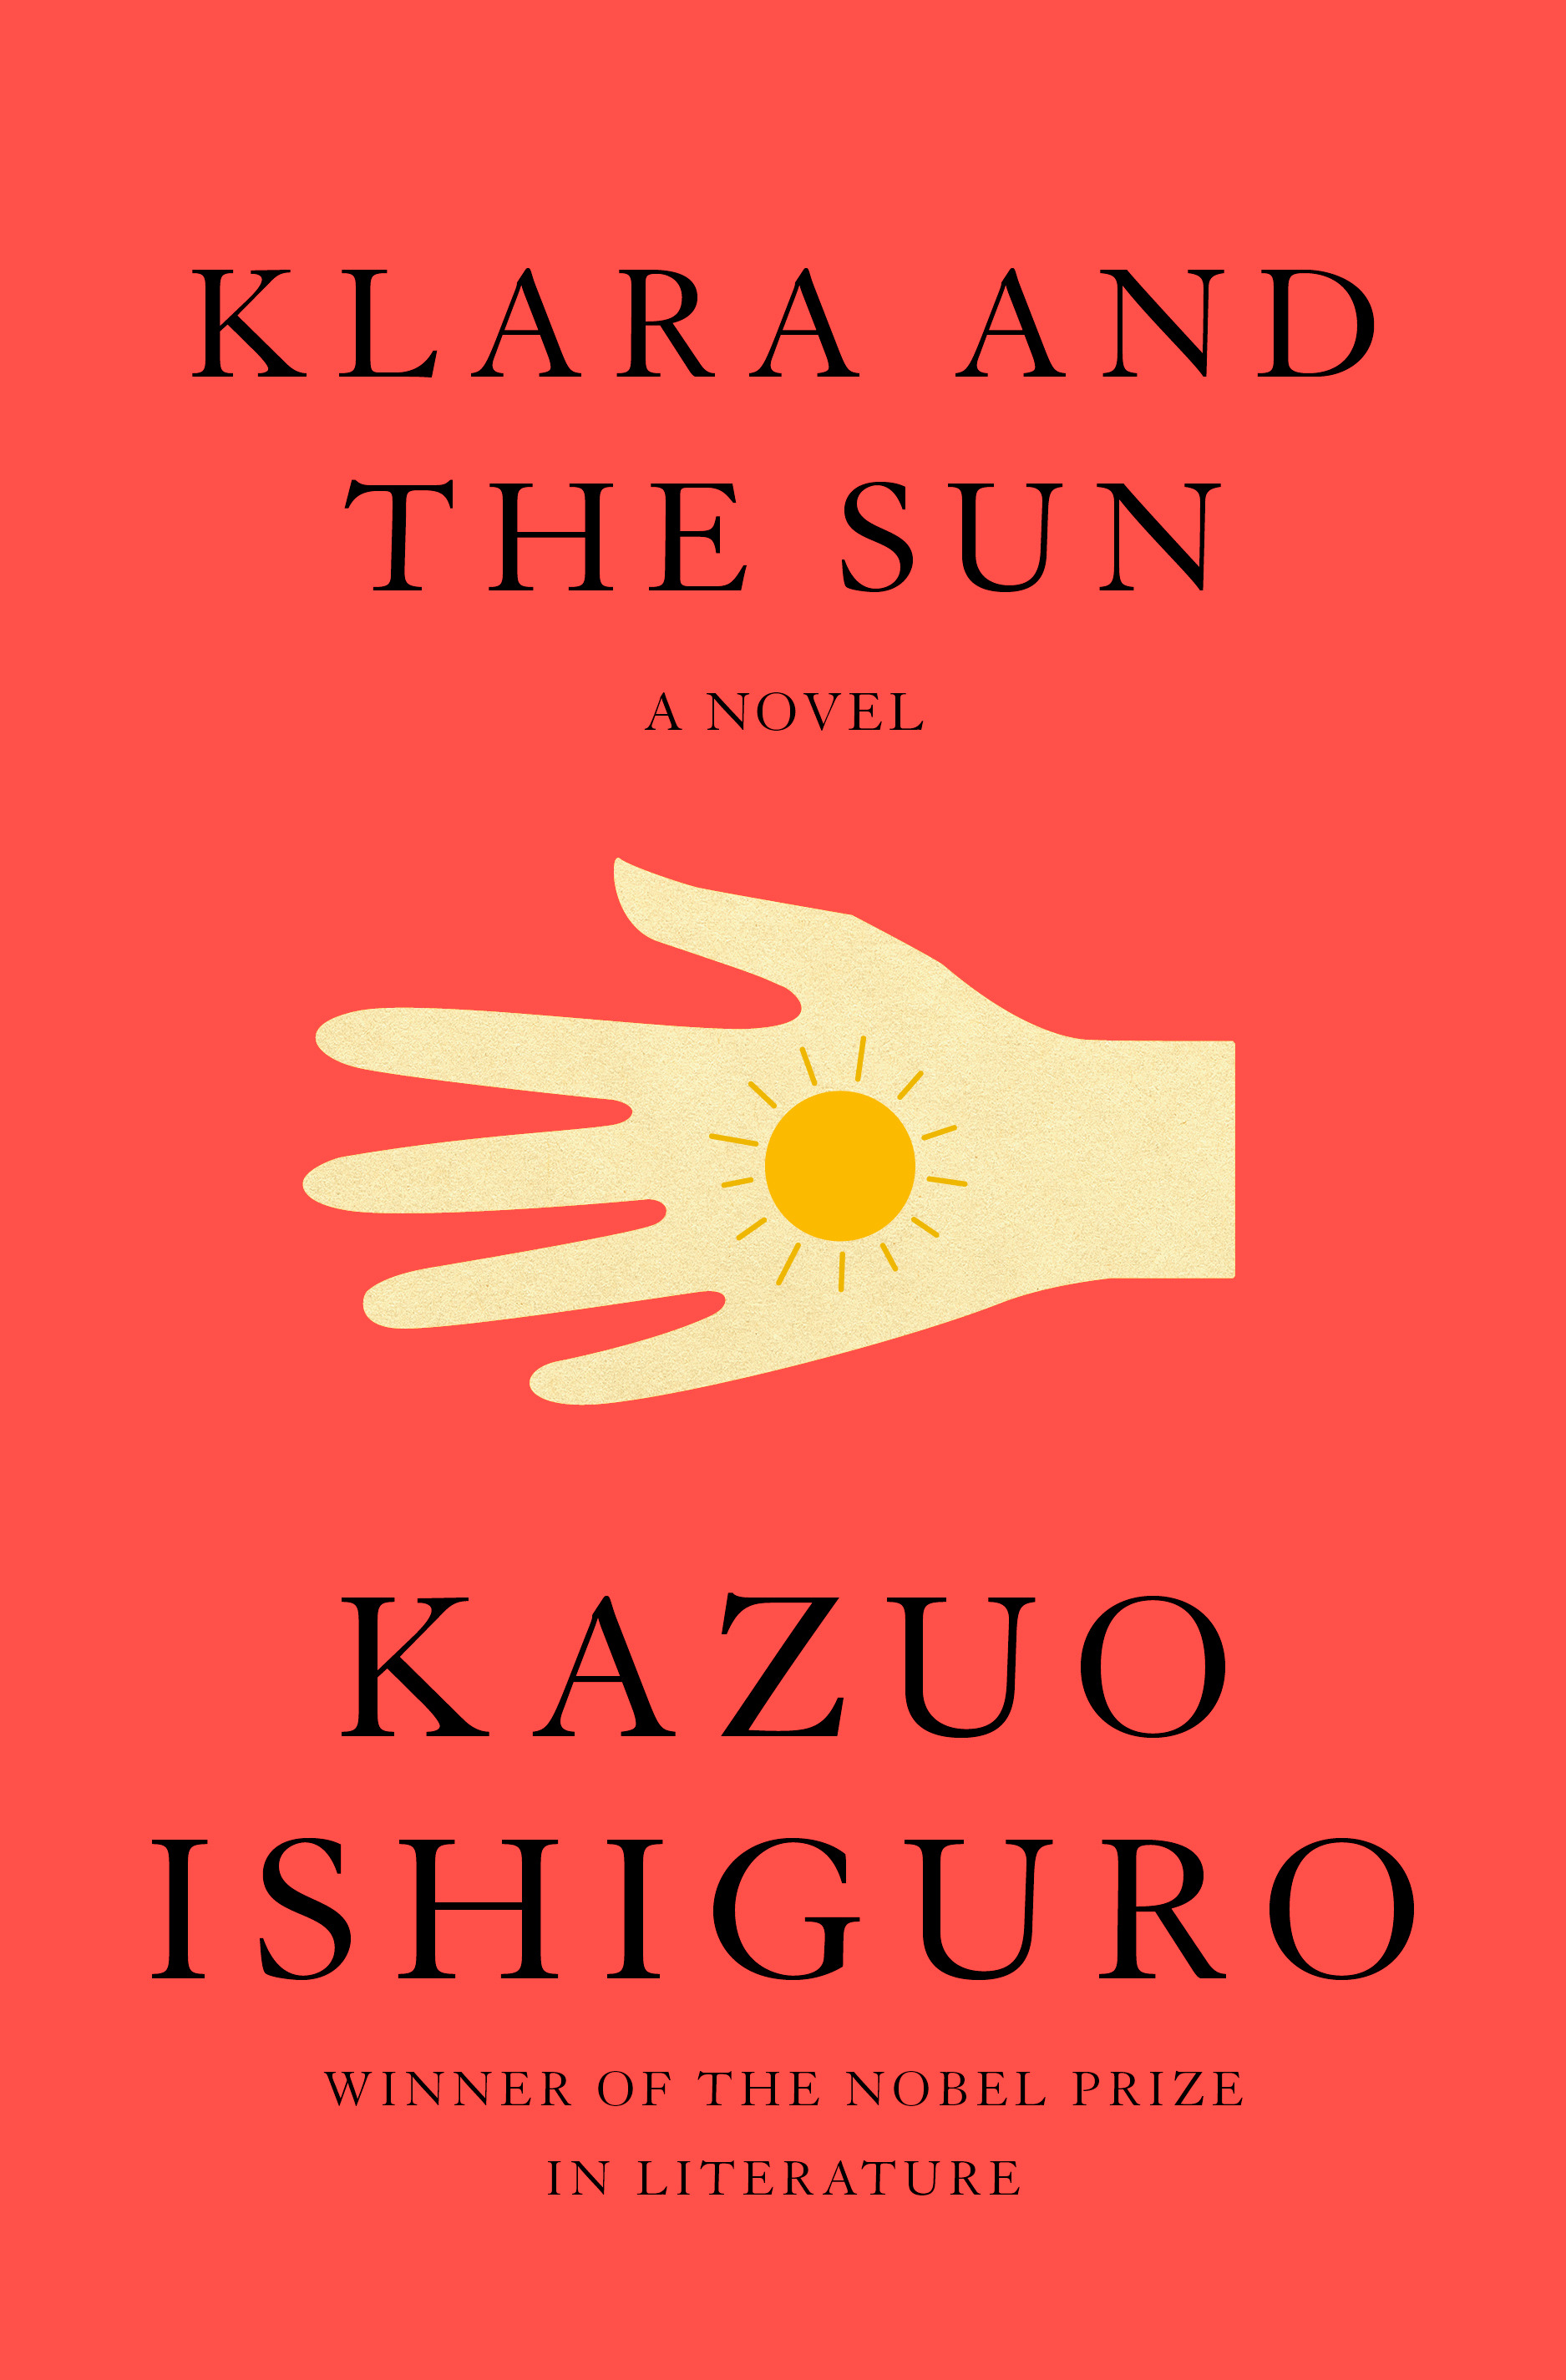 Virtual event with Kazuo Ishiguro/Klara and the Sun